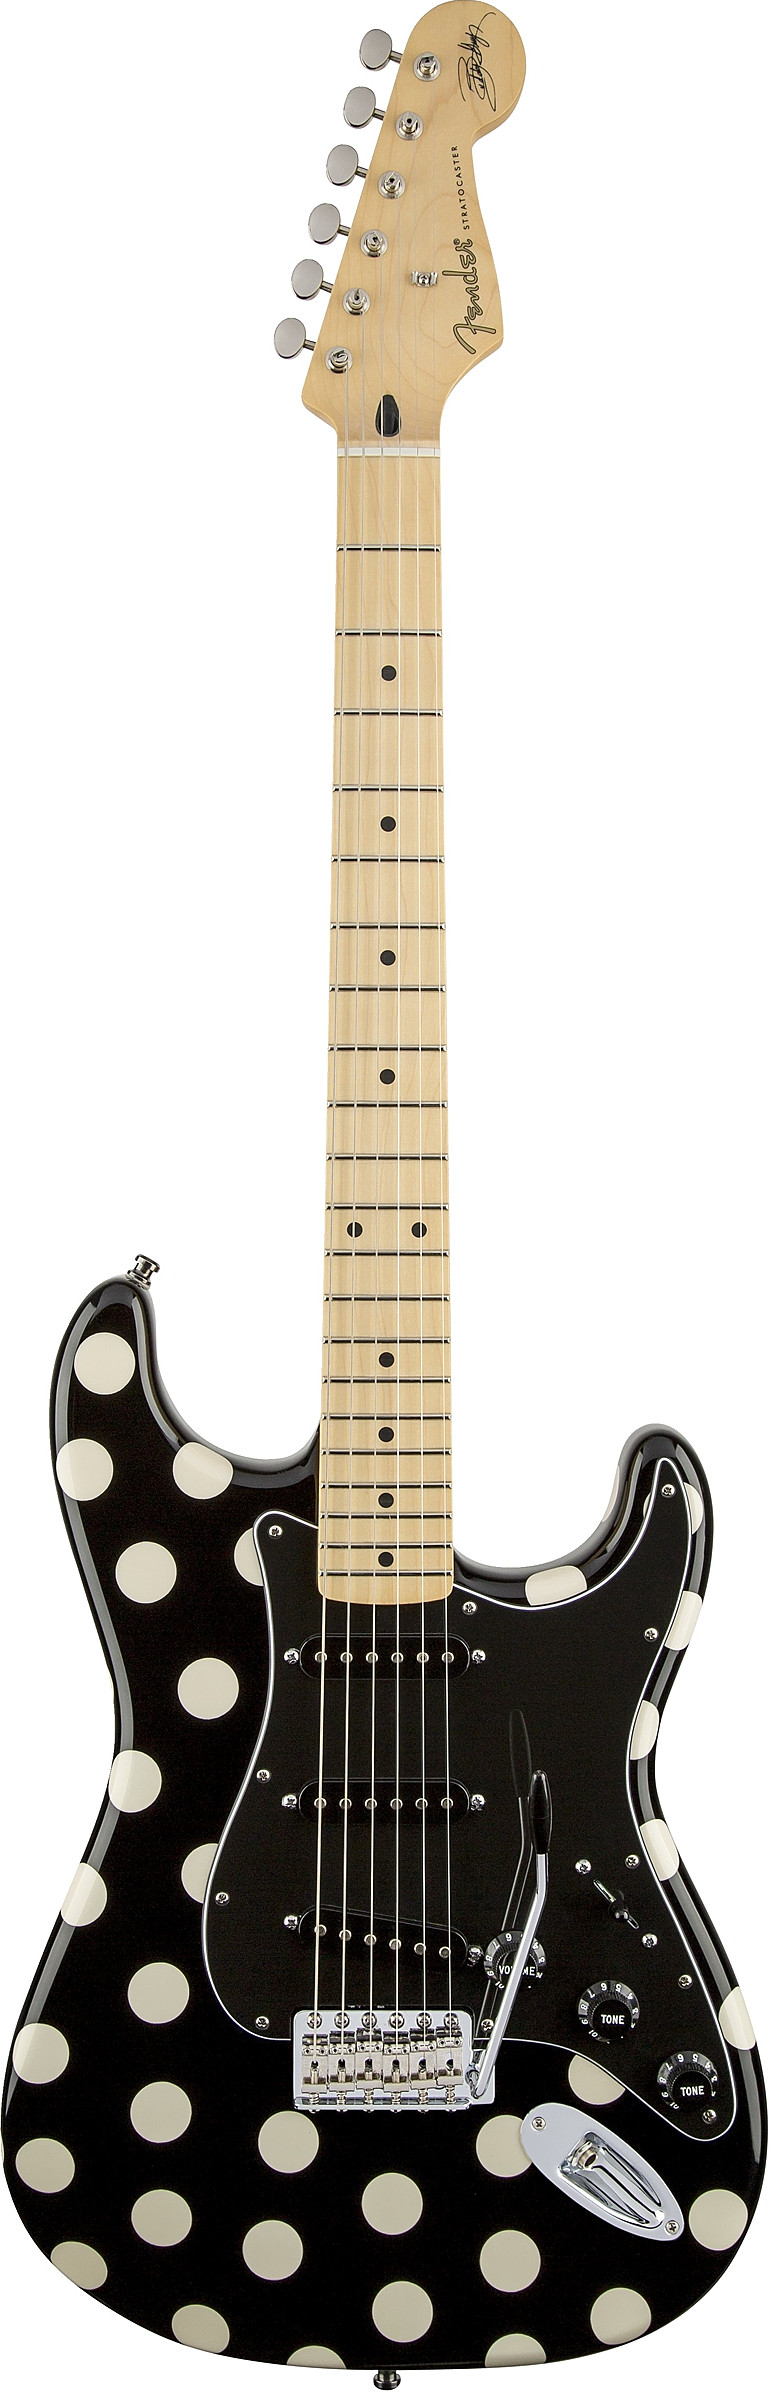 Buddy Guy Standard Stratocaster by Fender